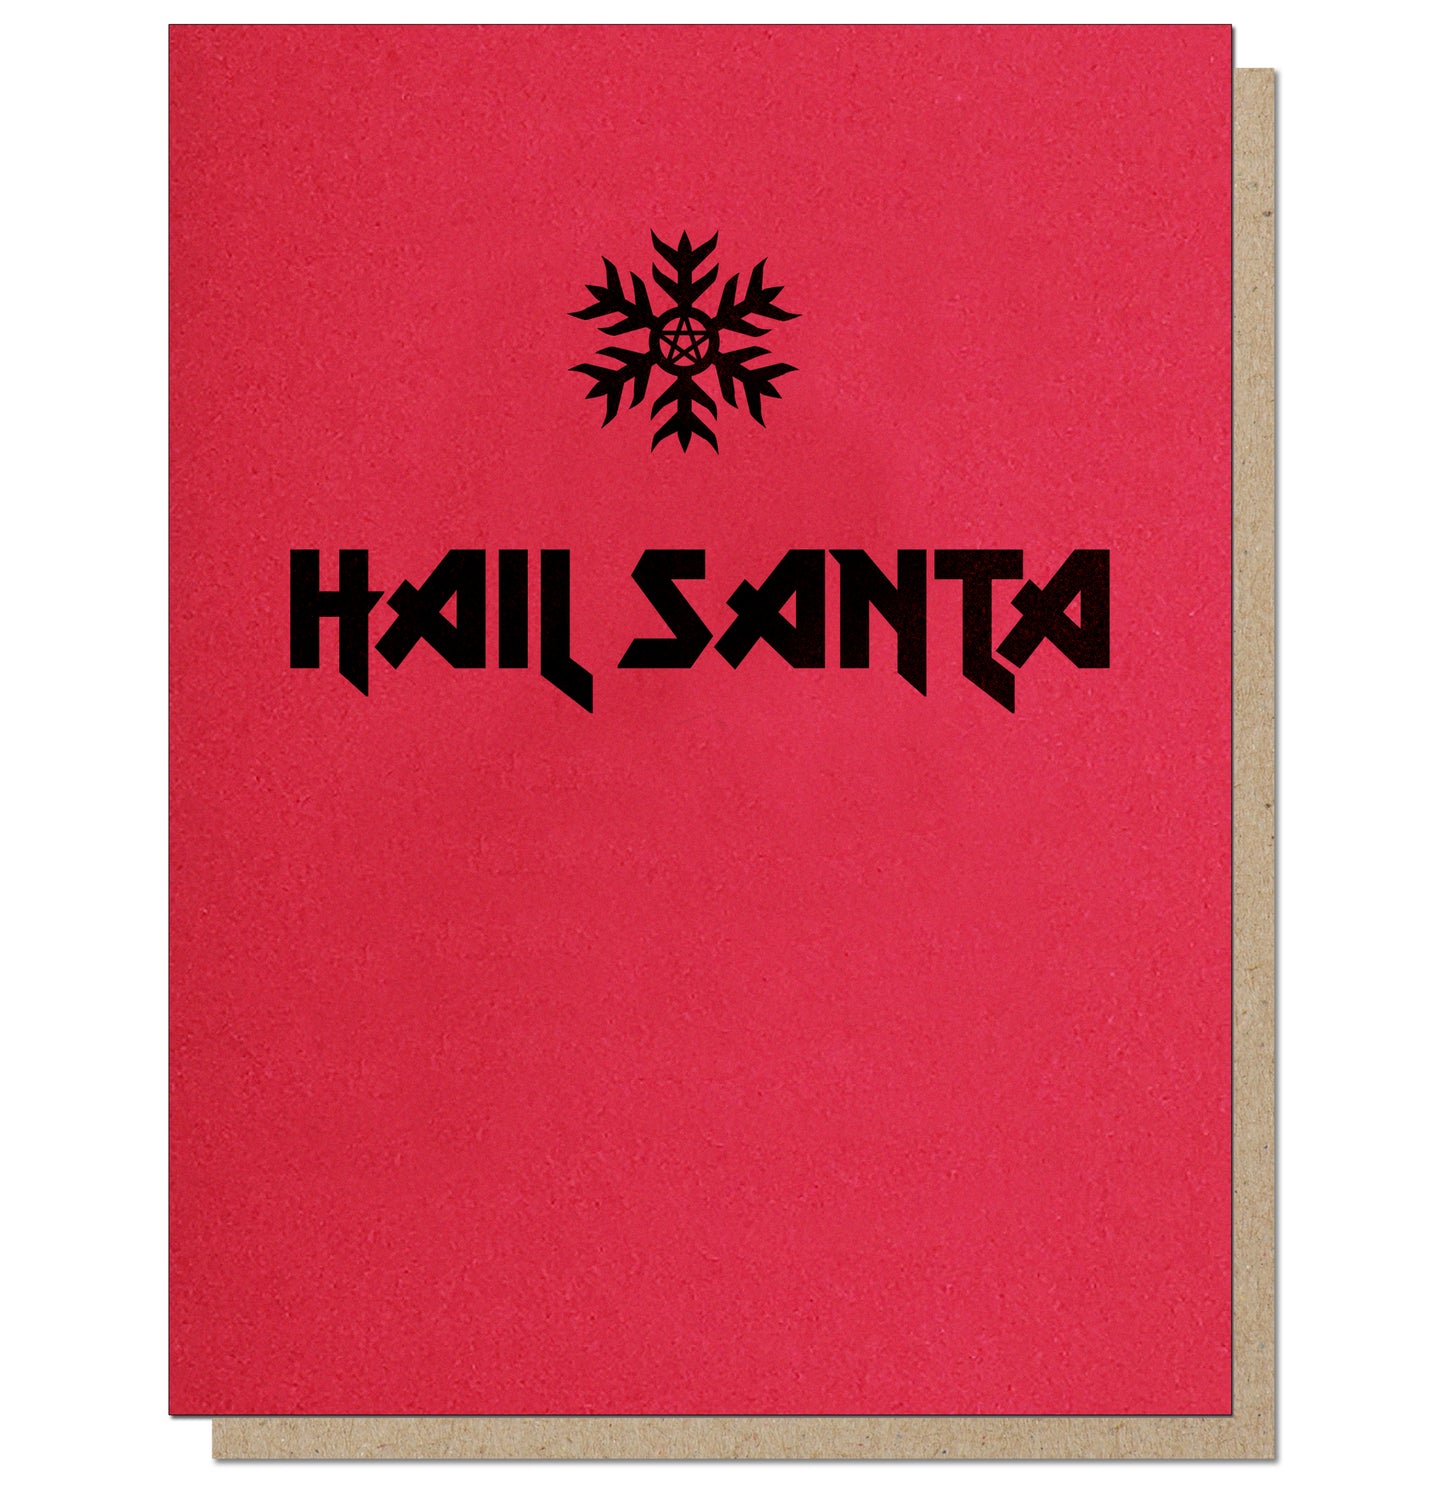 Hail Santa. Heavy Metal Holiday Card.